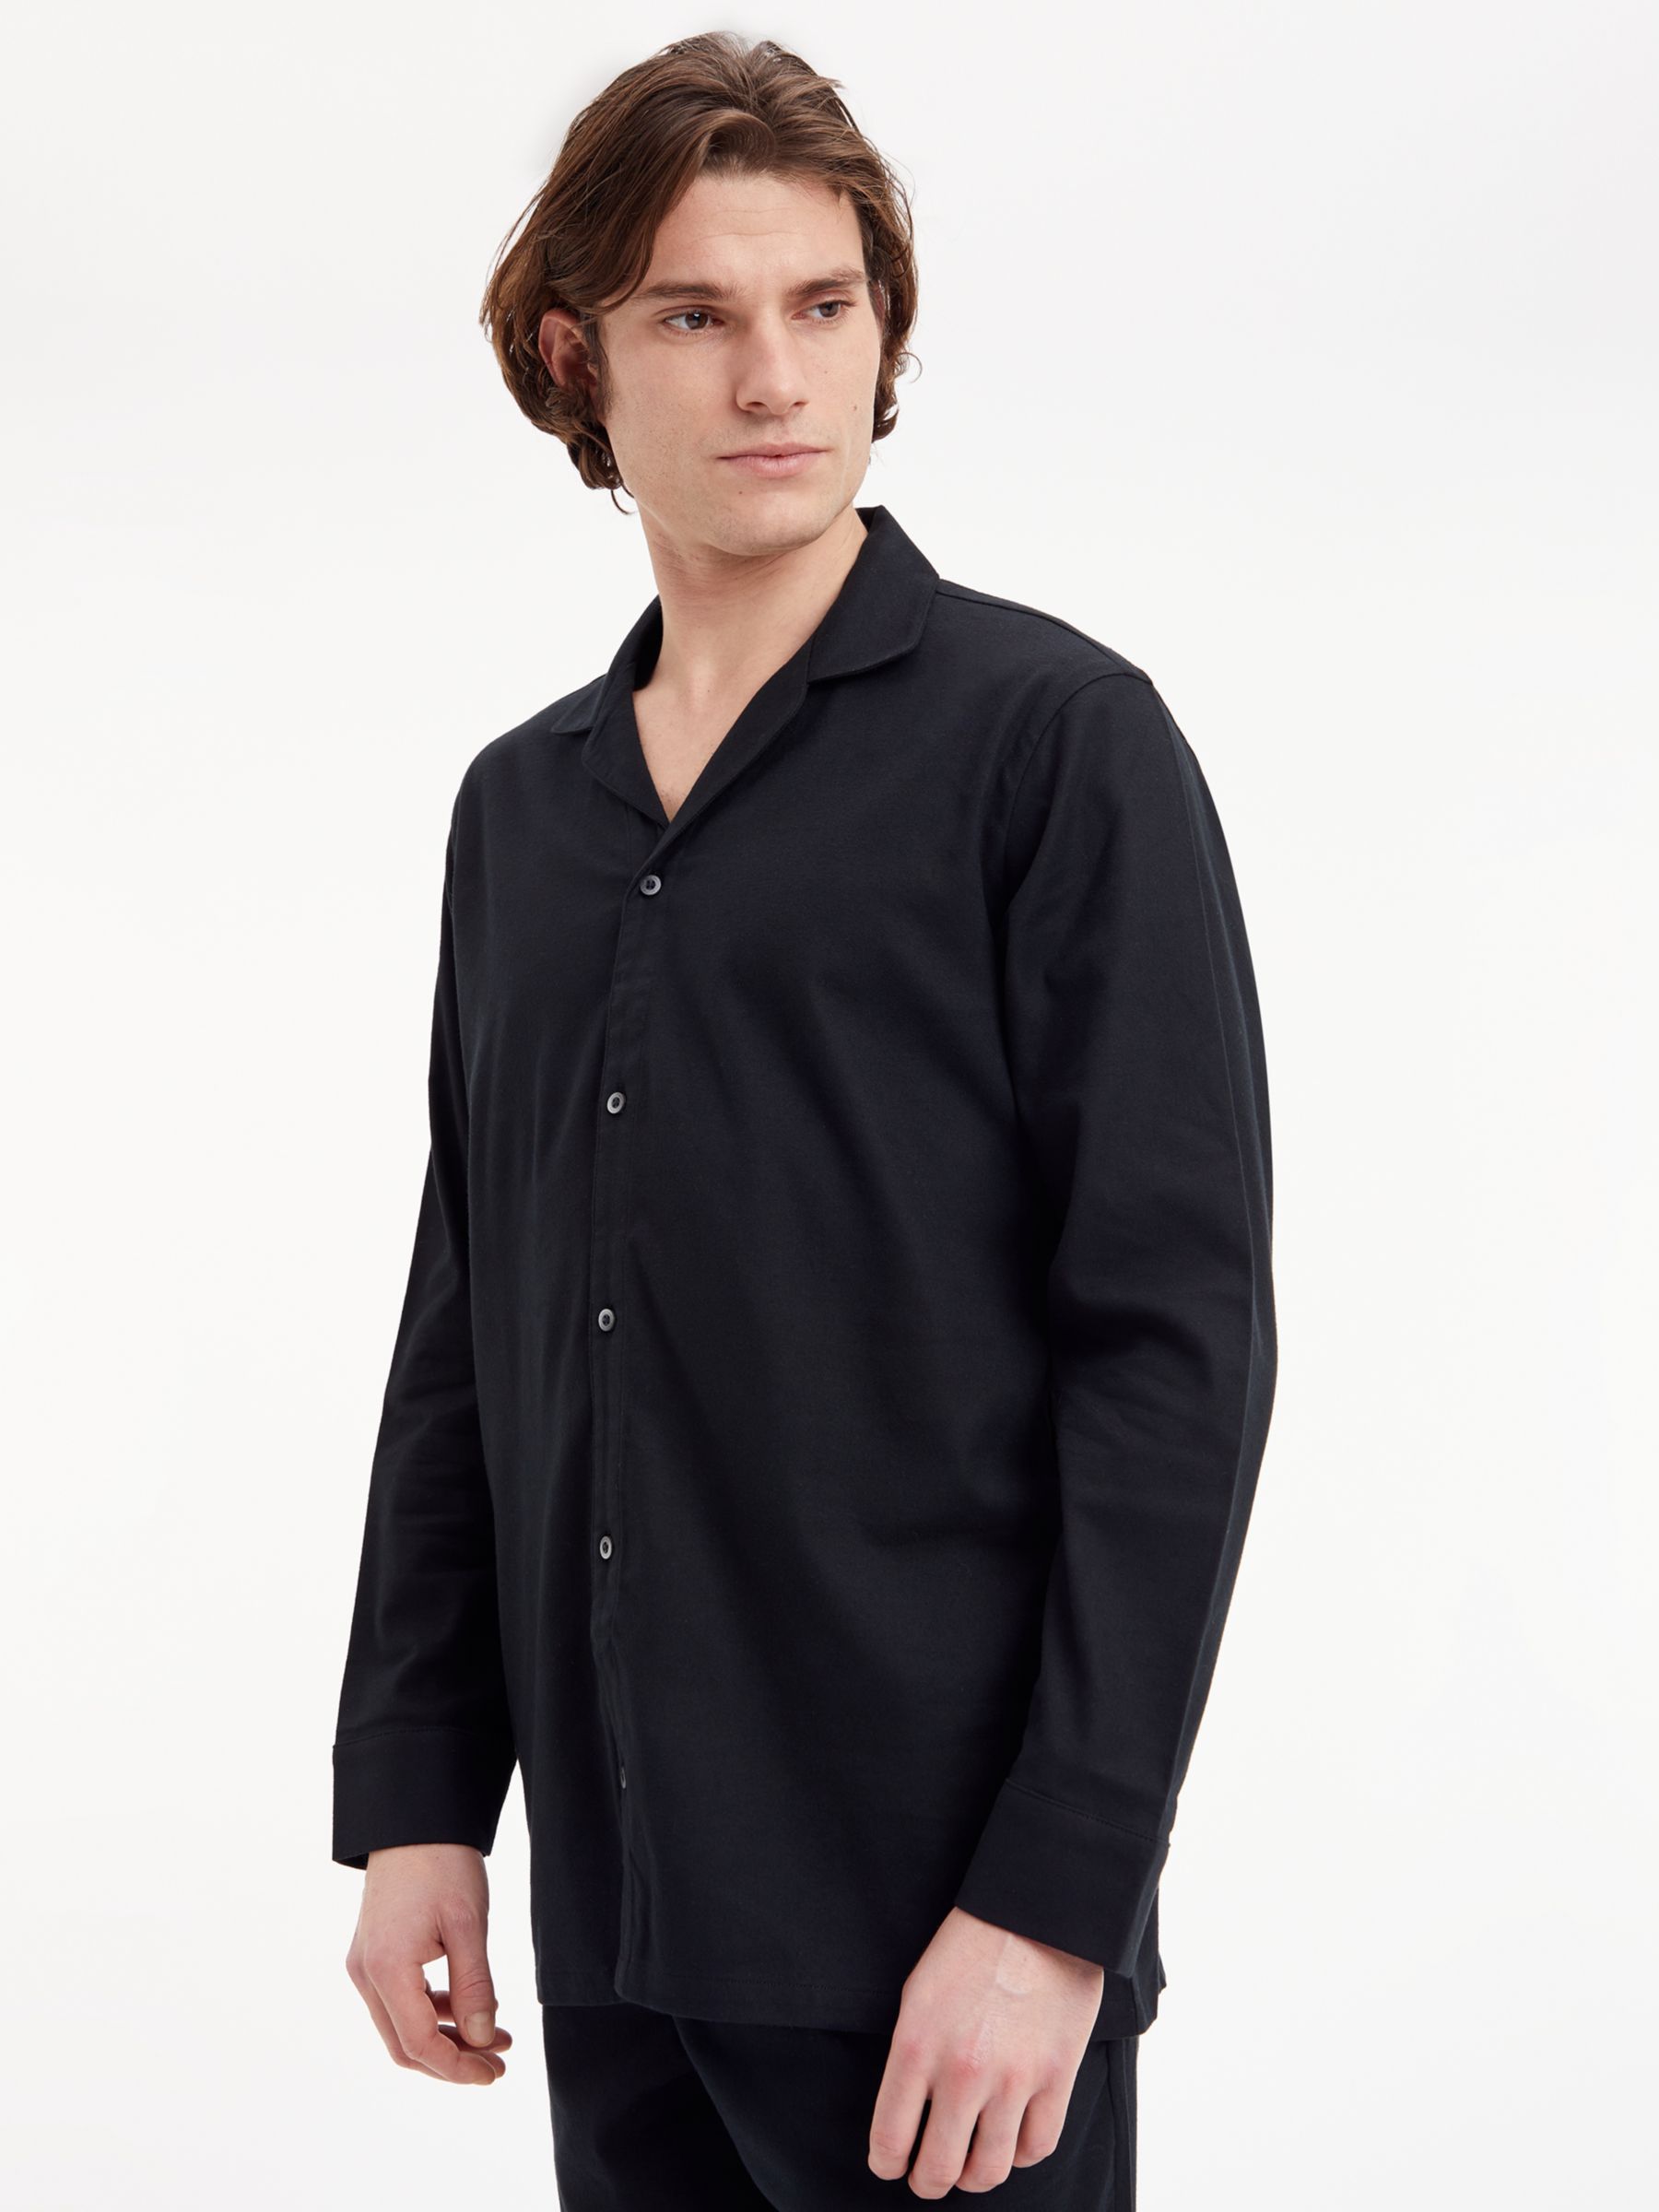 Calvin Klein Long Sleeve Flannel Pyjama Shirt, Black at John Lewis ...